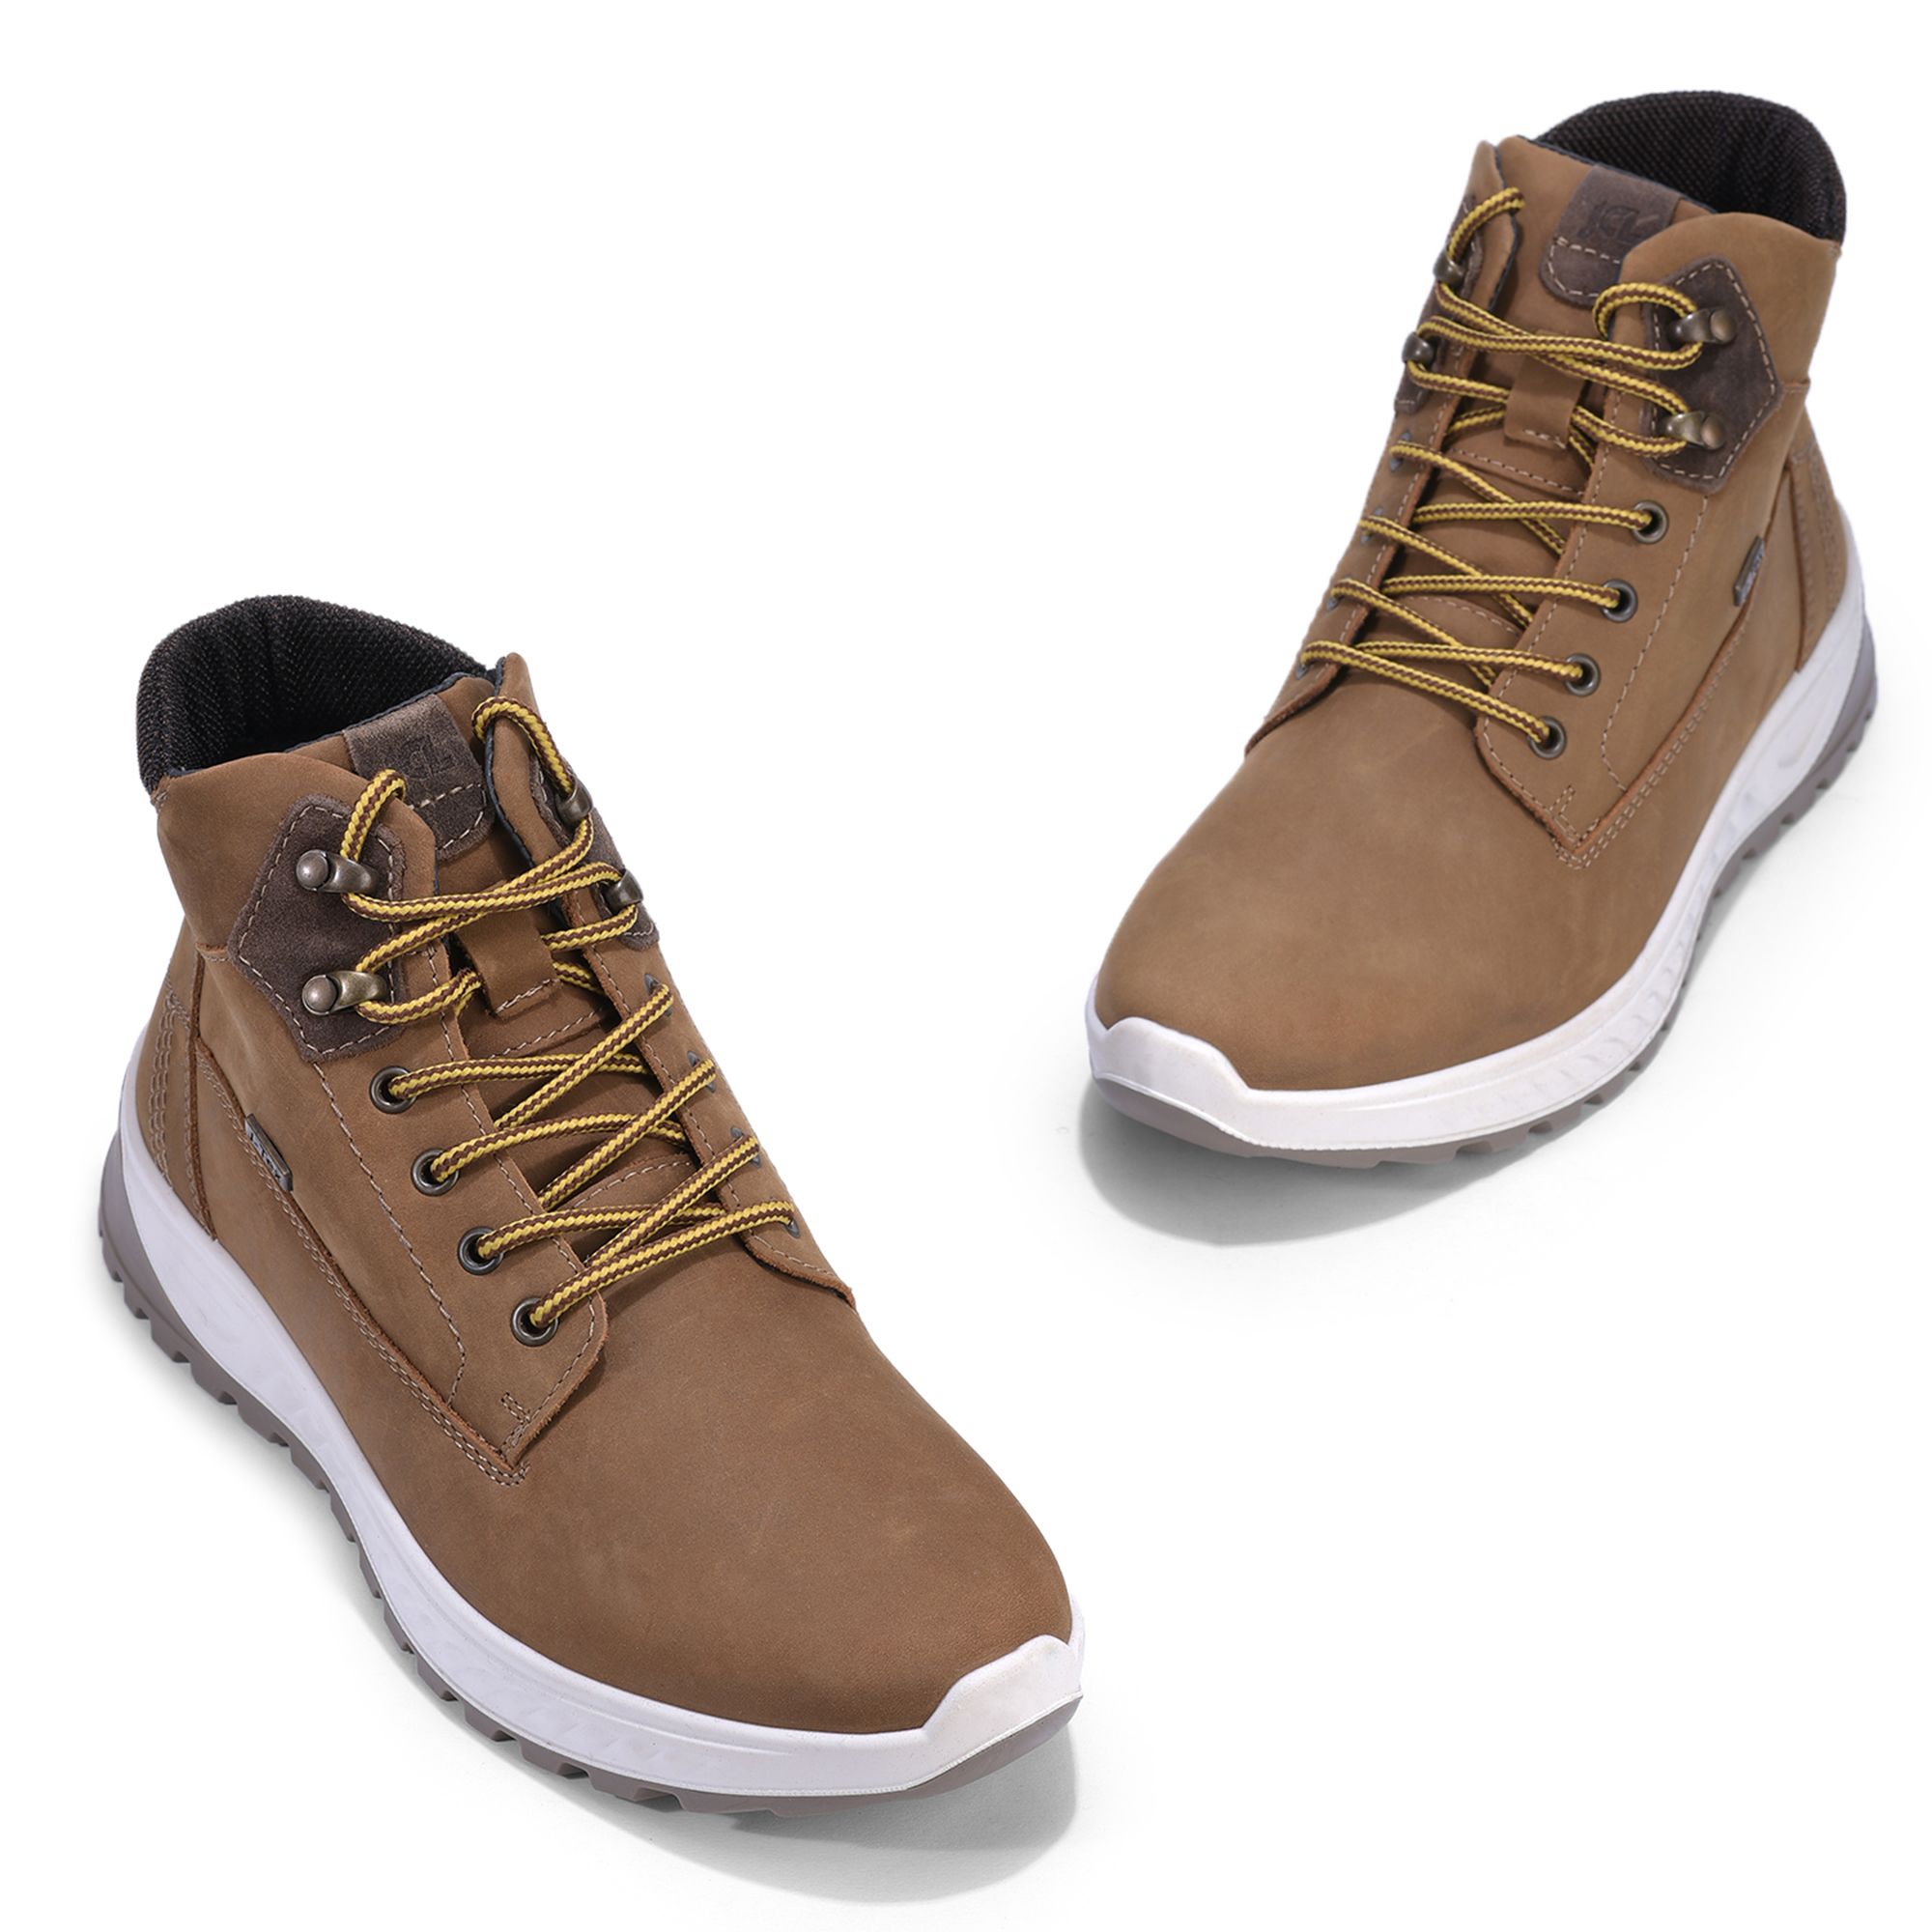 Light brown high-top sneaker for men